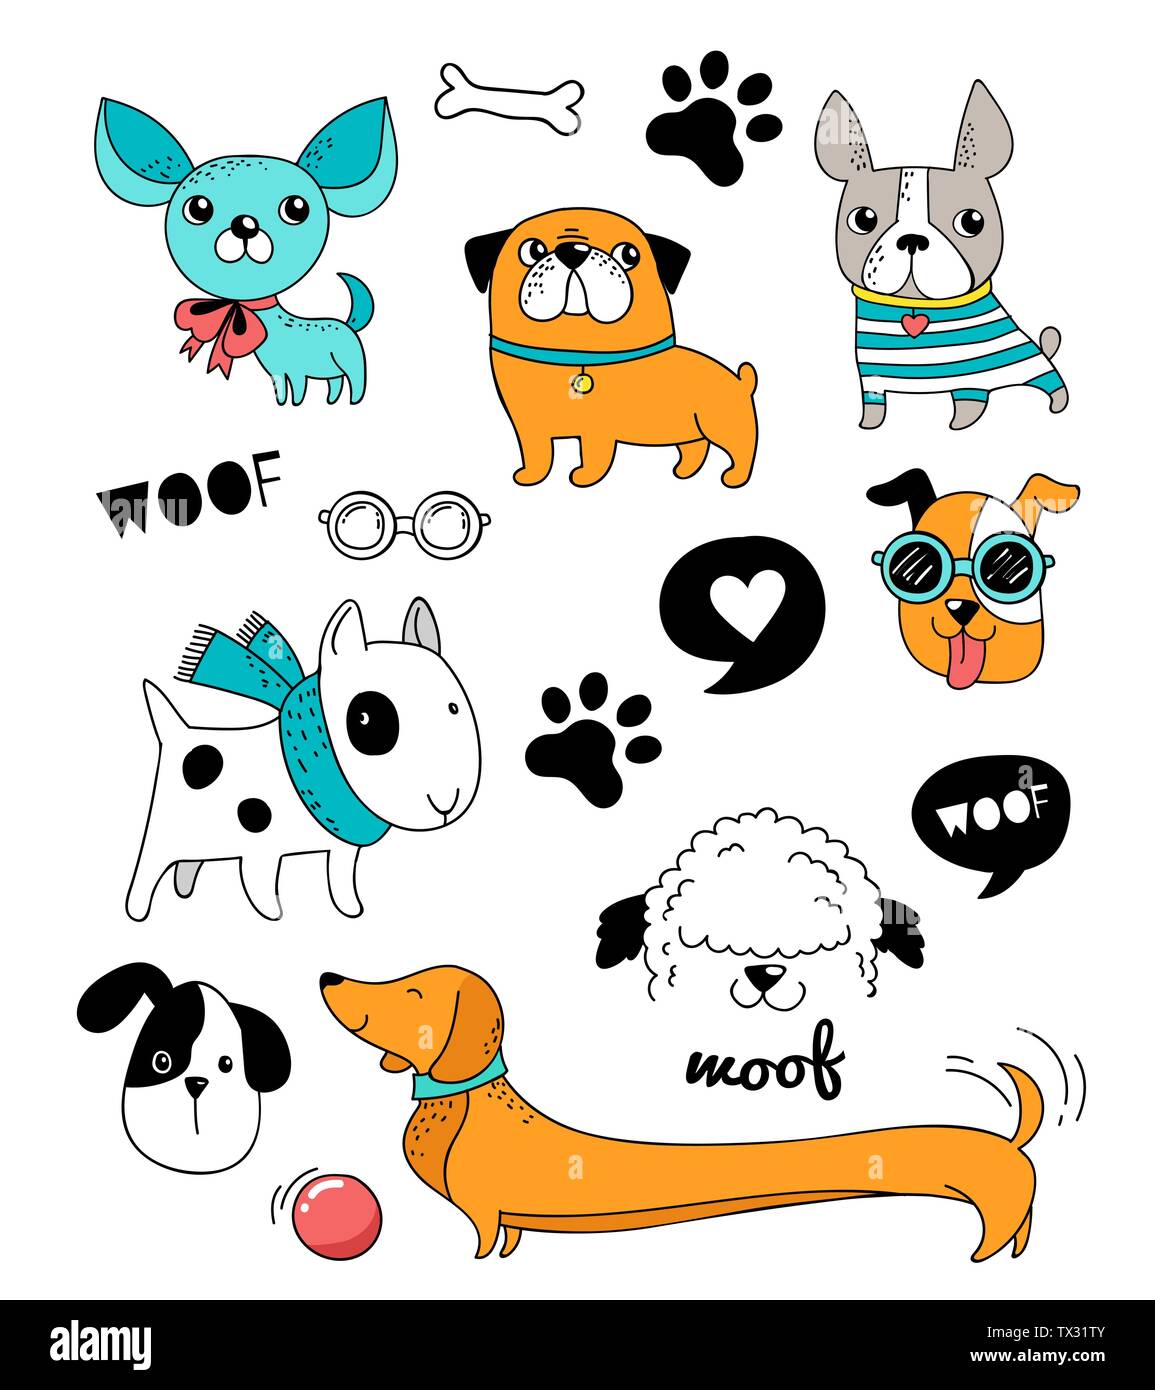 Lustige Hunde, Welpen Doodles, Skizzen und Abbildungen. Vector Icons Stock Vektor